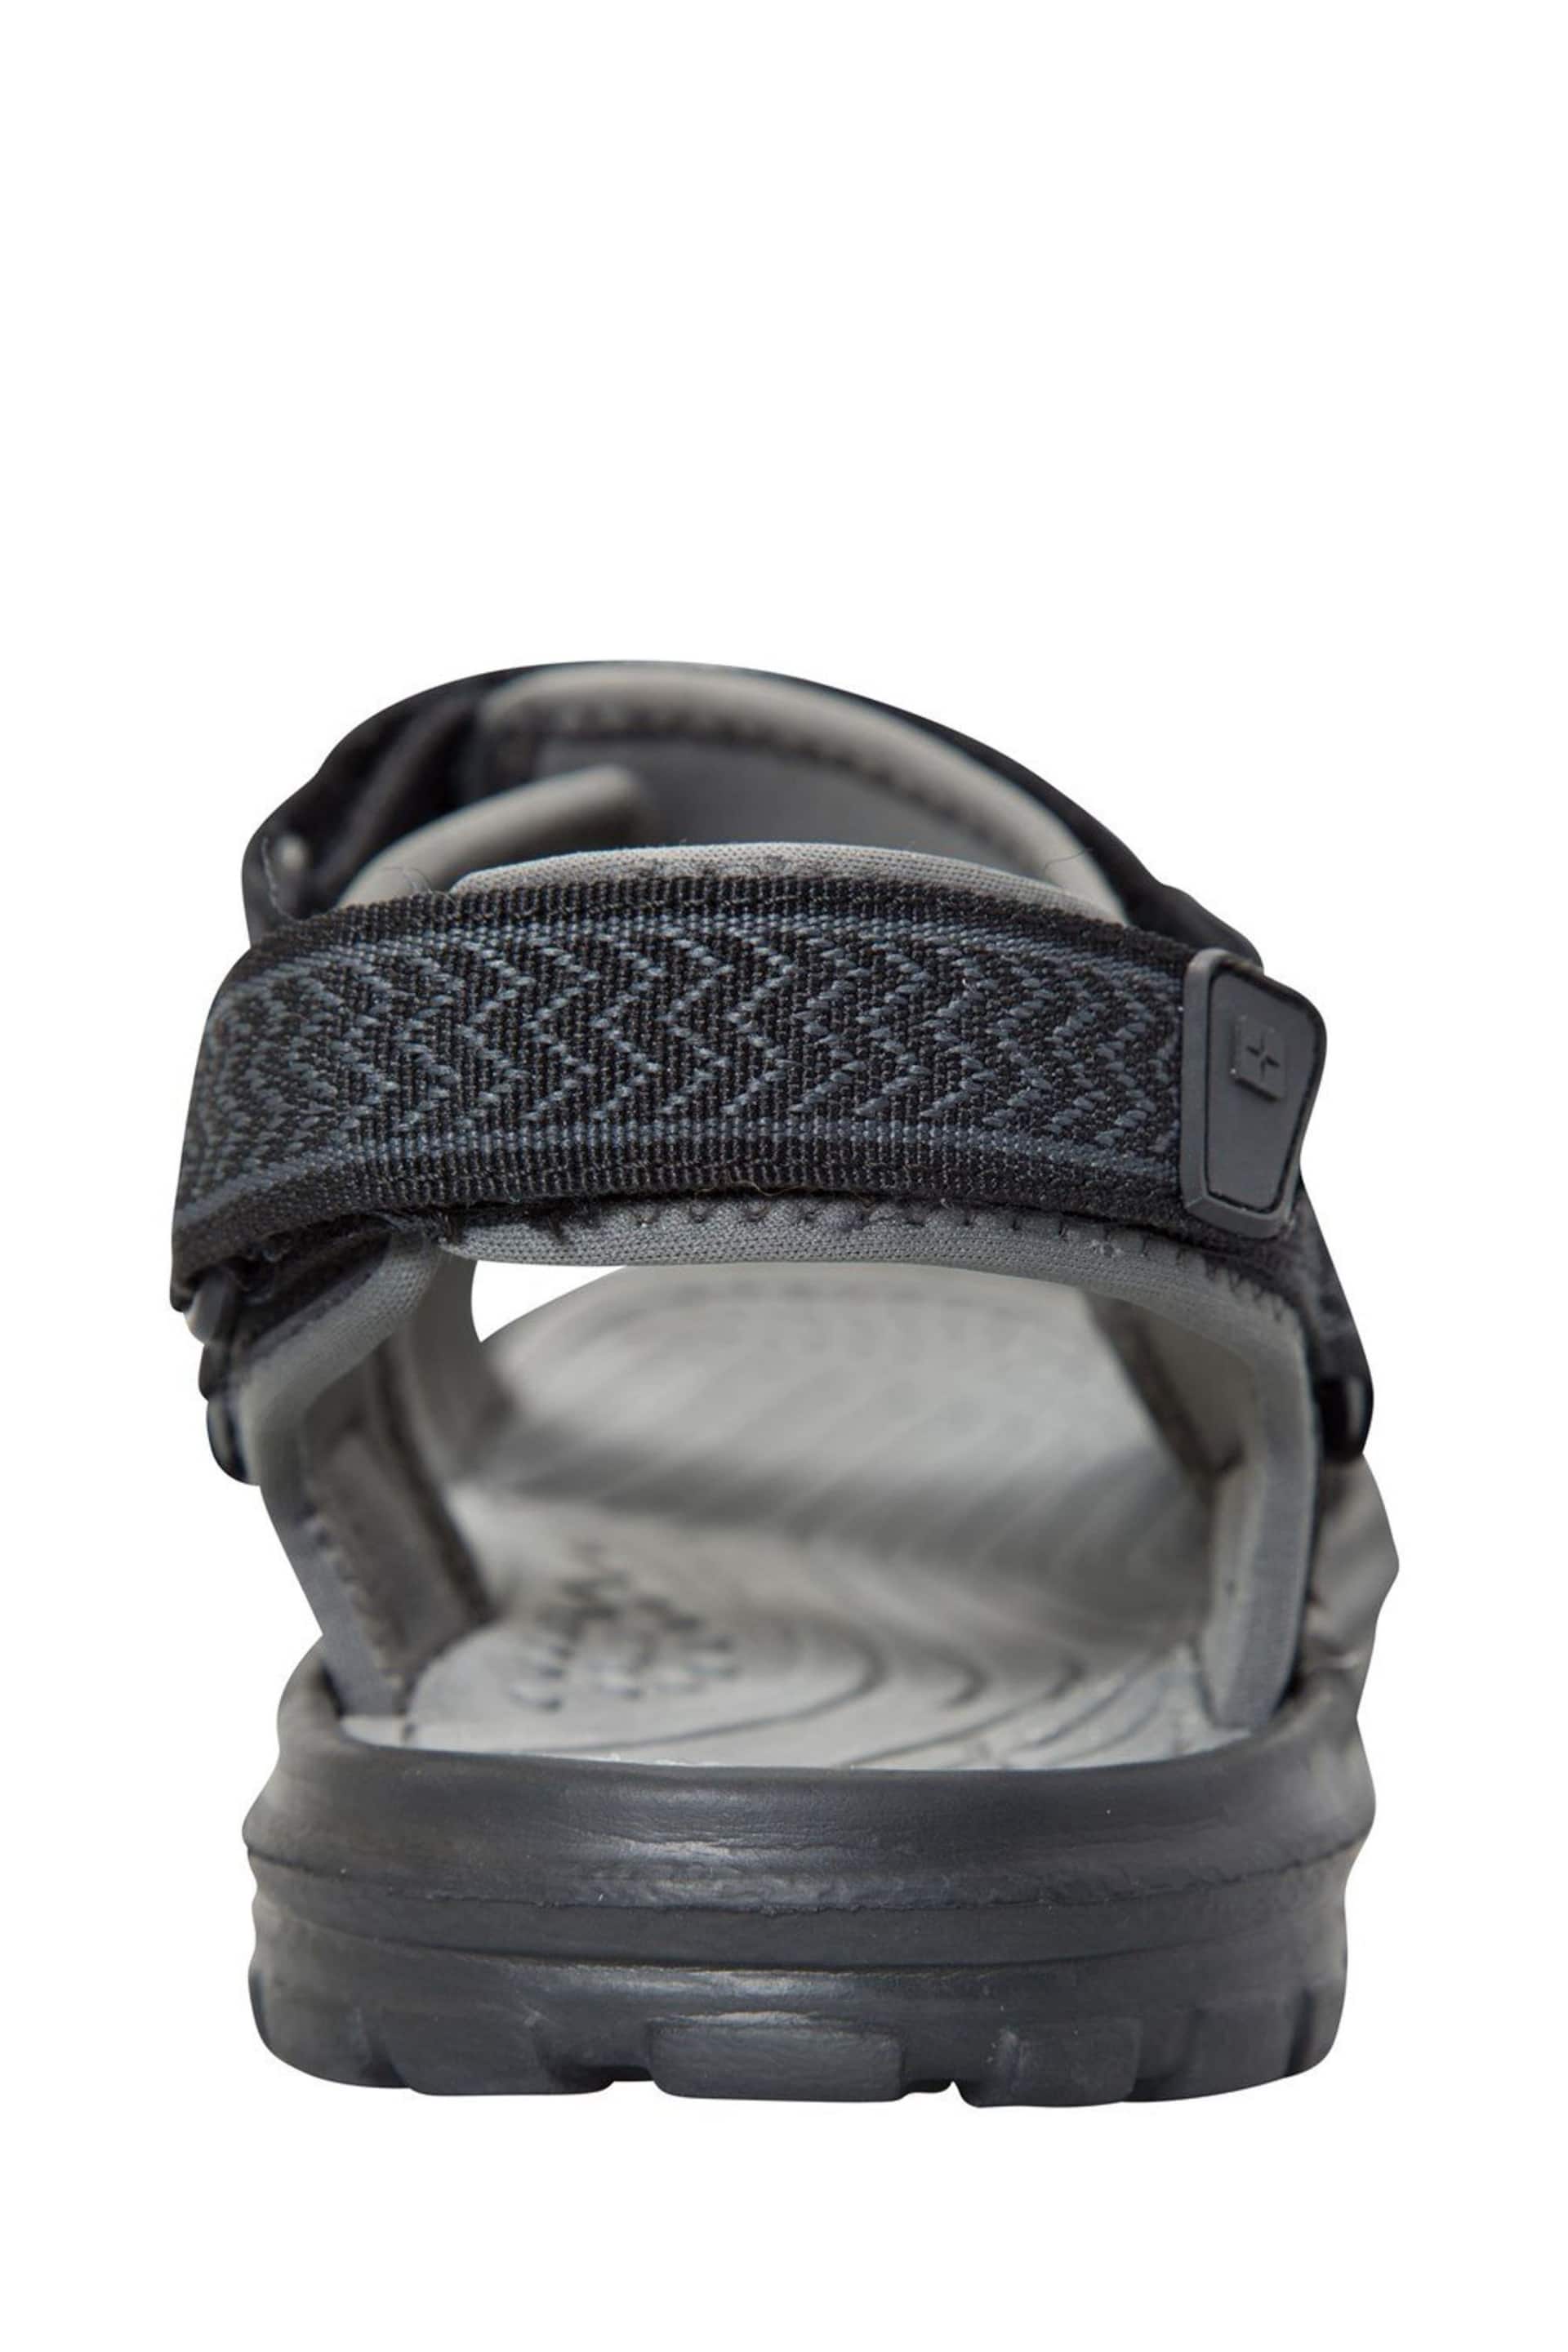 Mountain Warehouse Grey Crete Mens Sandals - Image 4 of 4